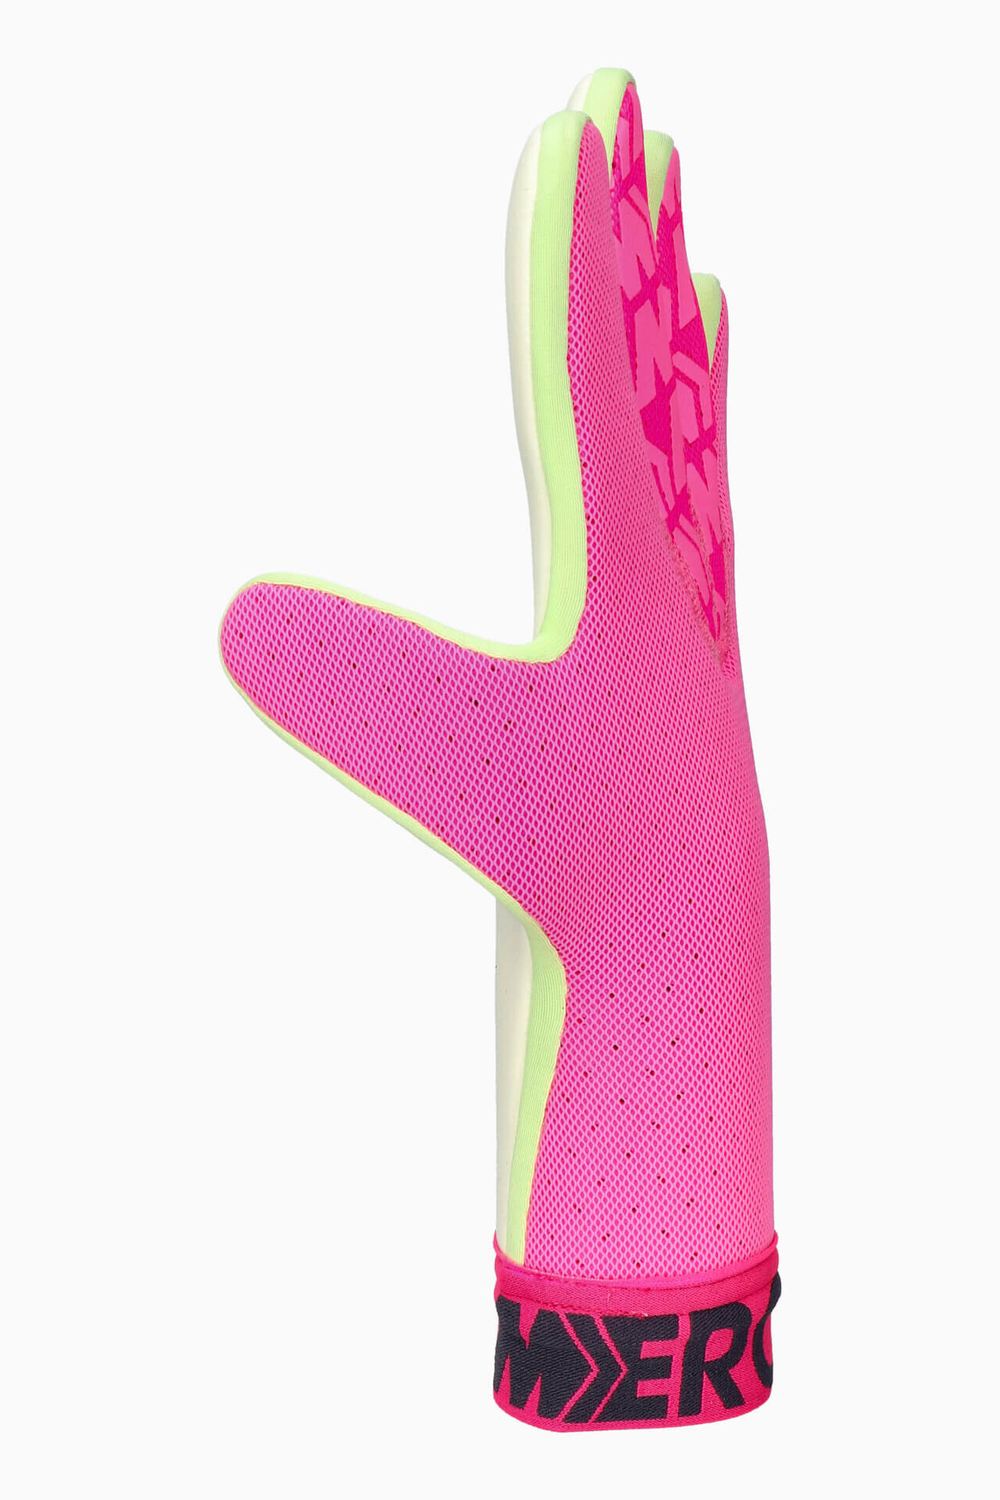 Вратарские перчатки Nike Mercurial Touch Elite